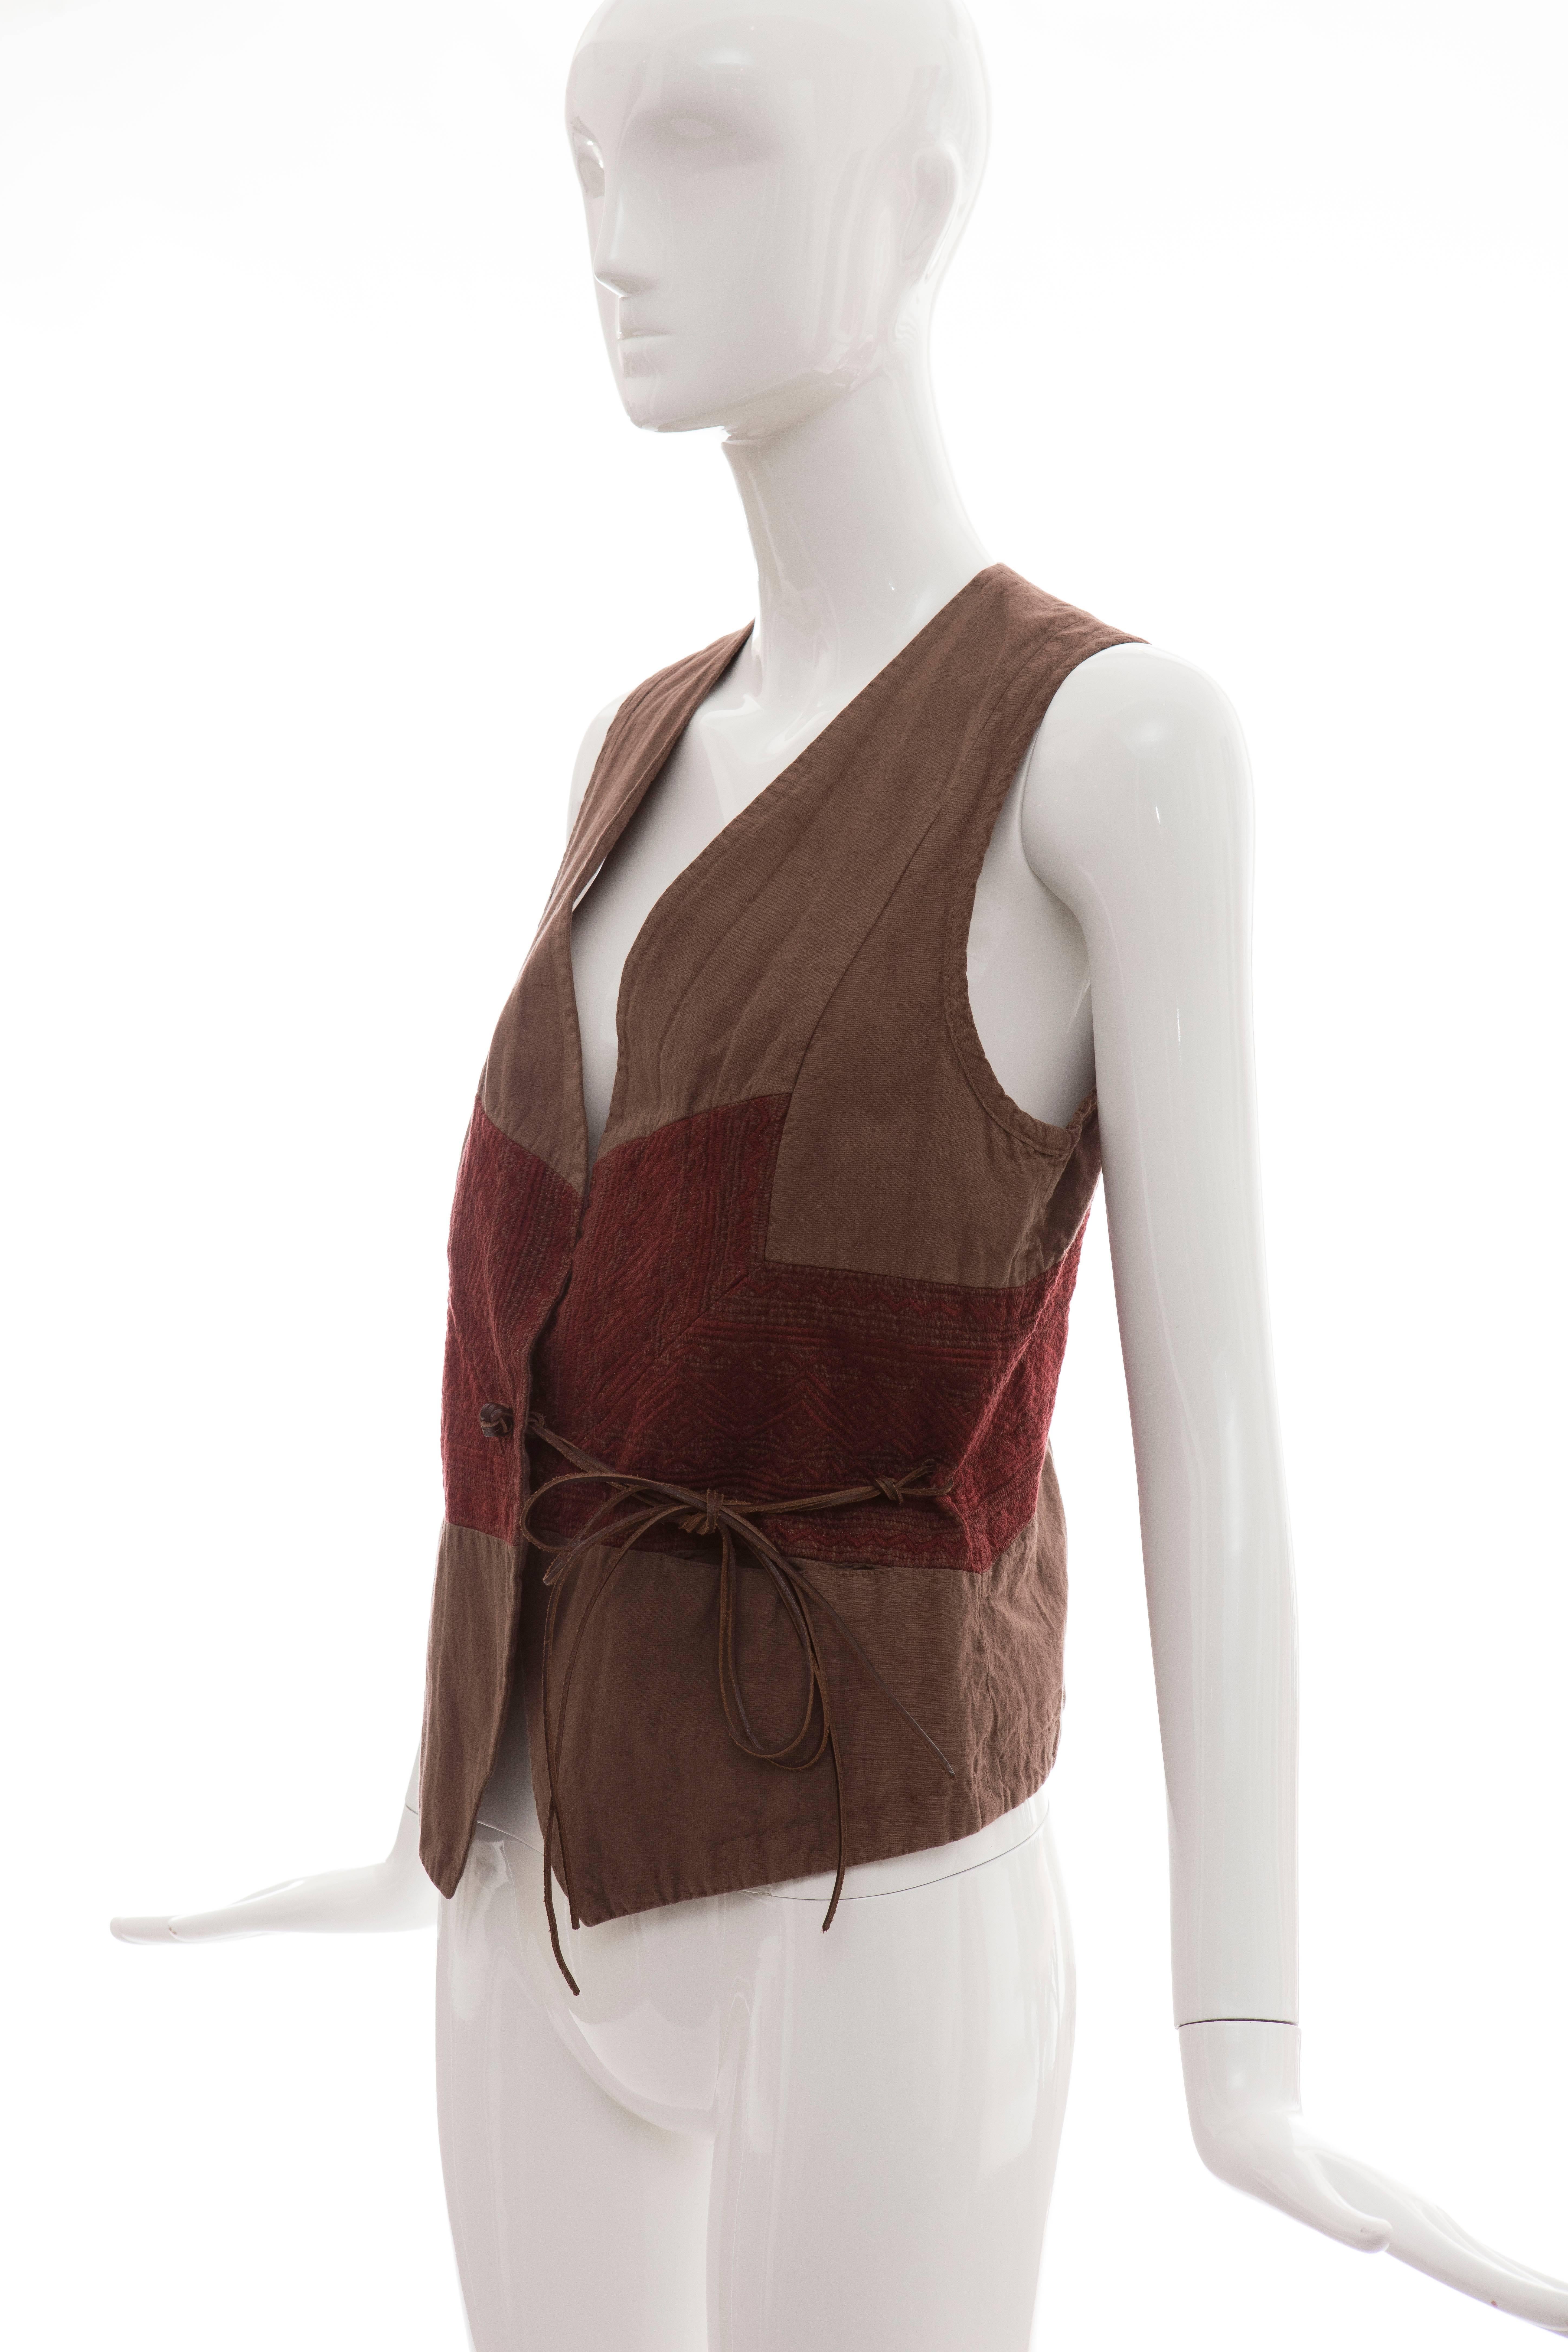 Dries Van Noten Cotton Linen Embroidered Vest, Spring/Summer 2003 For Sale 3